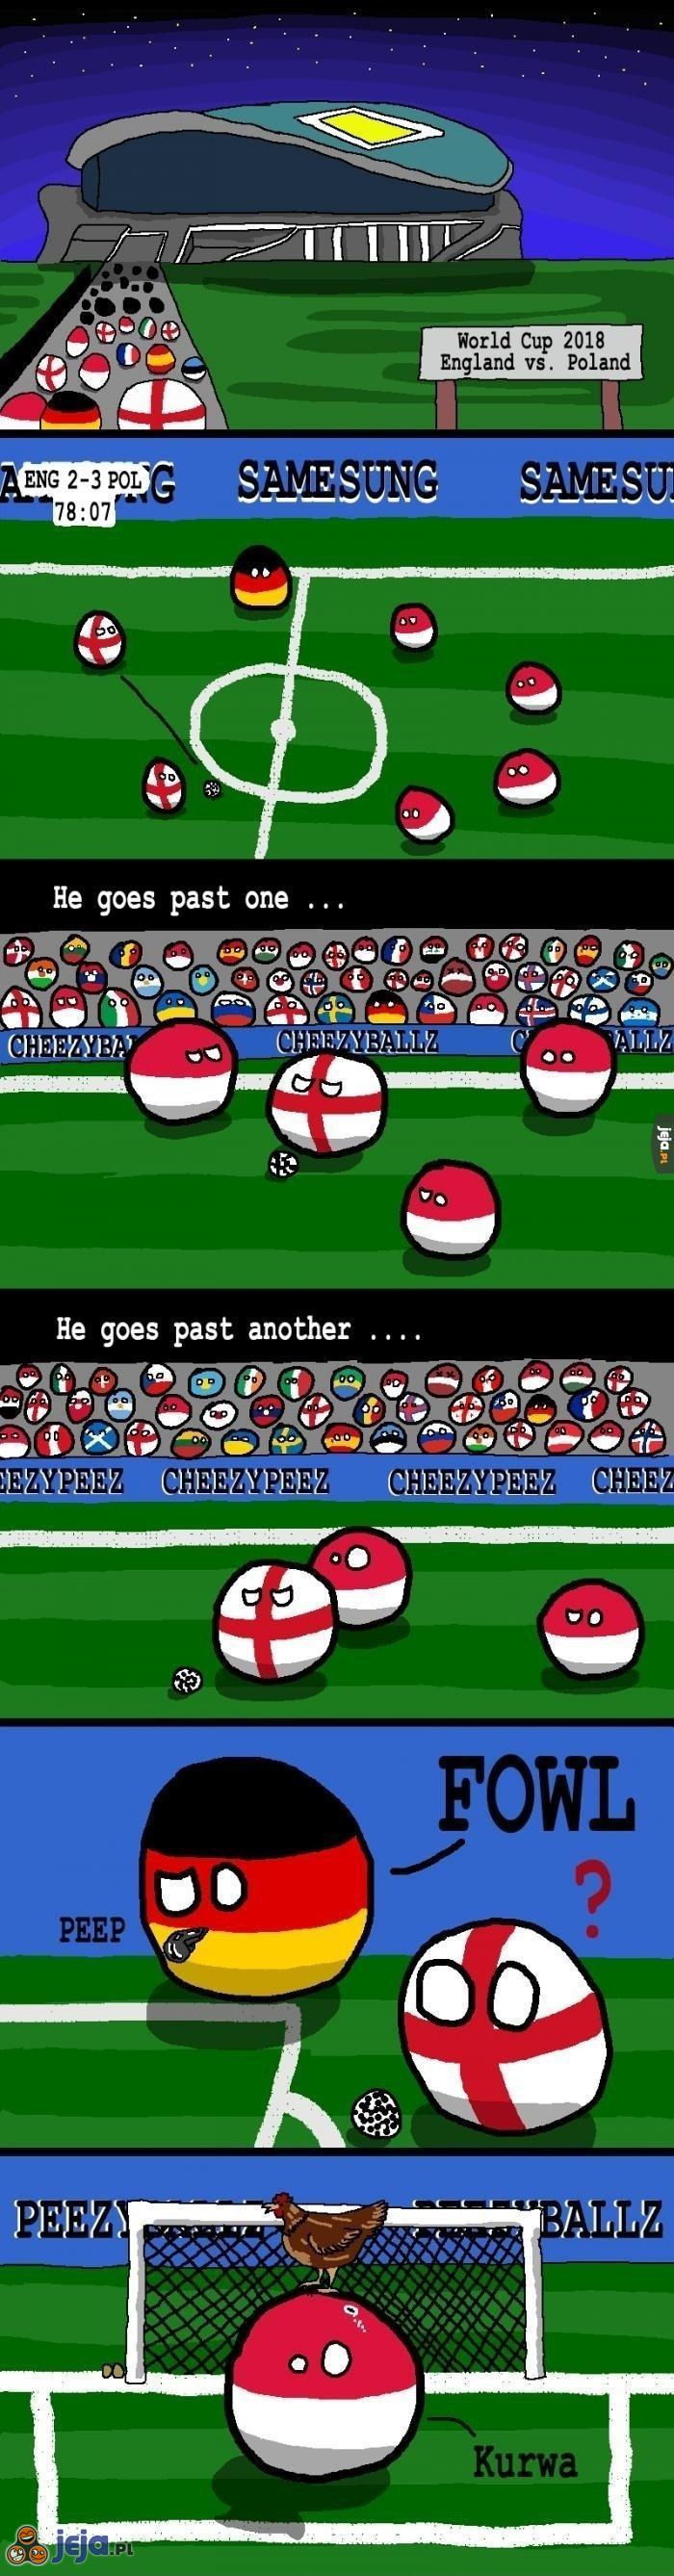 Anglia vs Polska